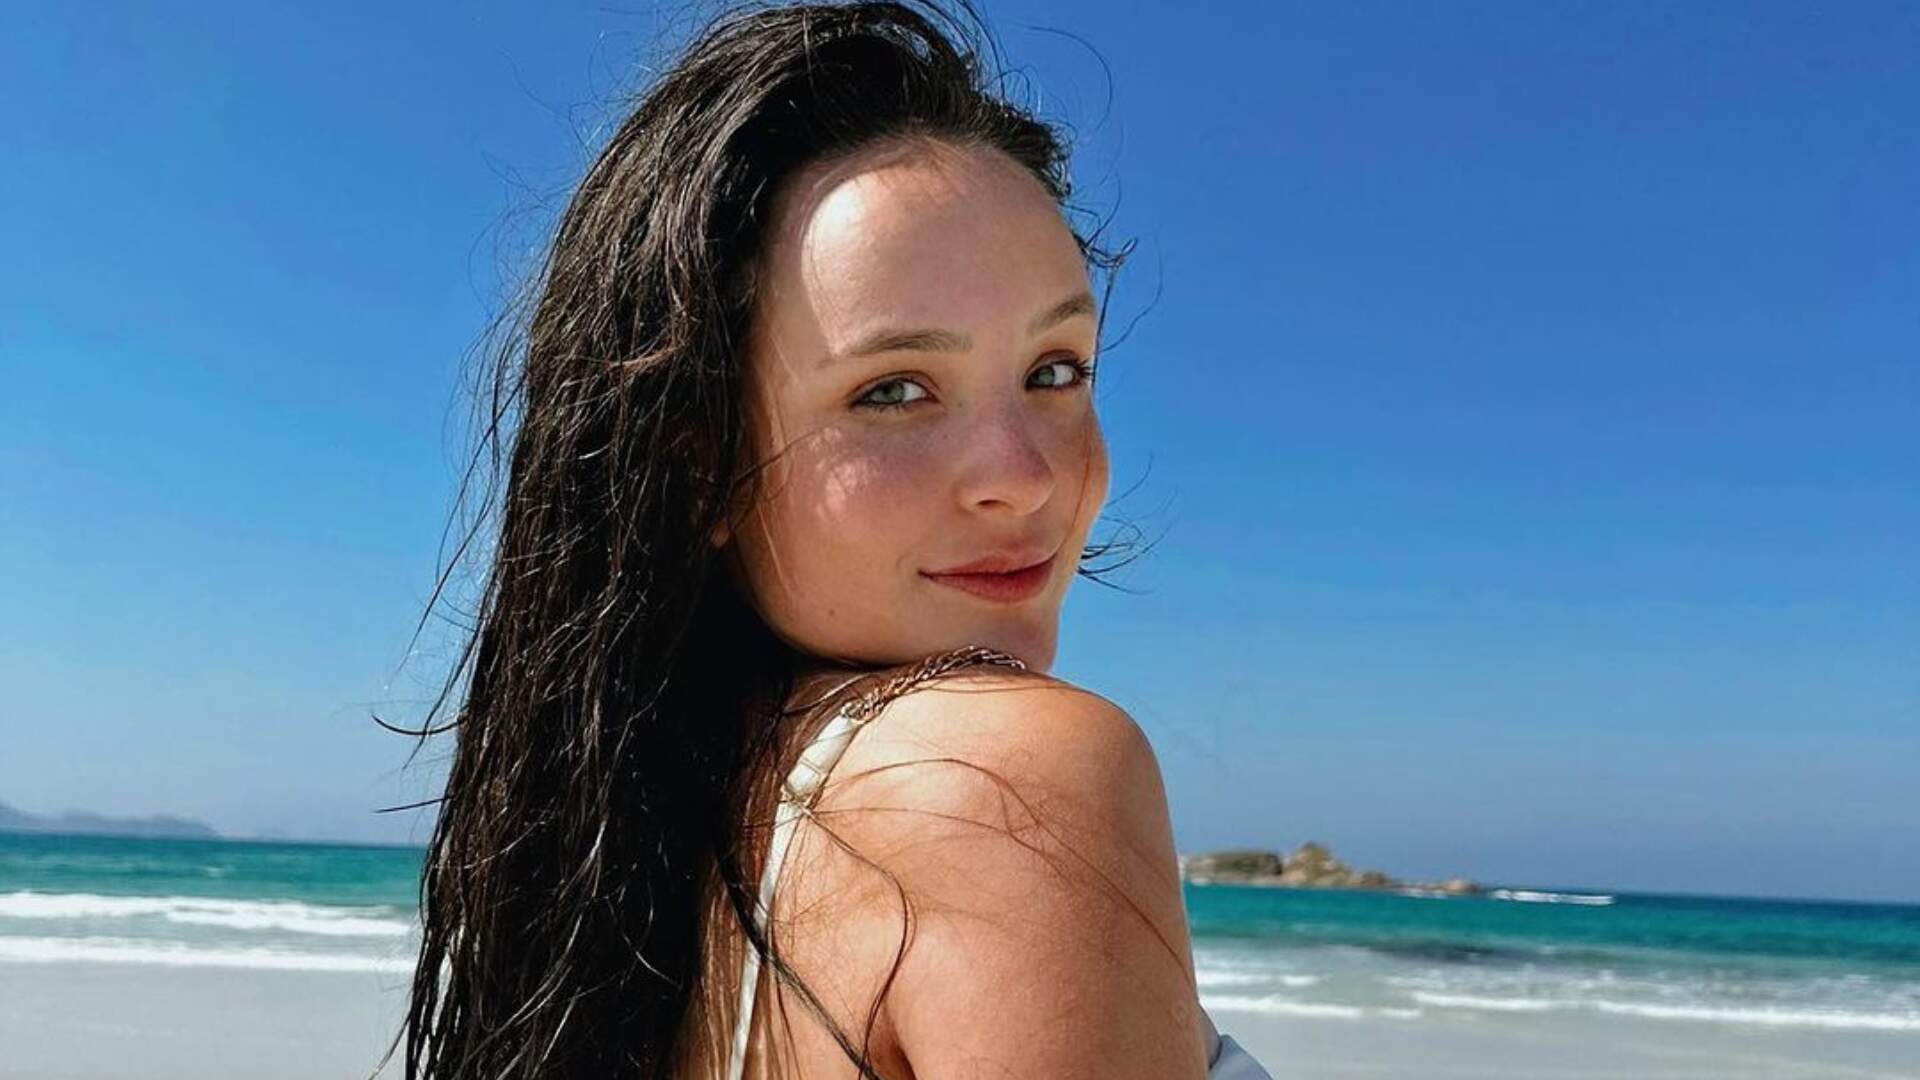 Na praia, Larissa Manoela esbanja beleza natural de biquíni branco provocante enquanto exibe corpão